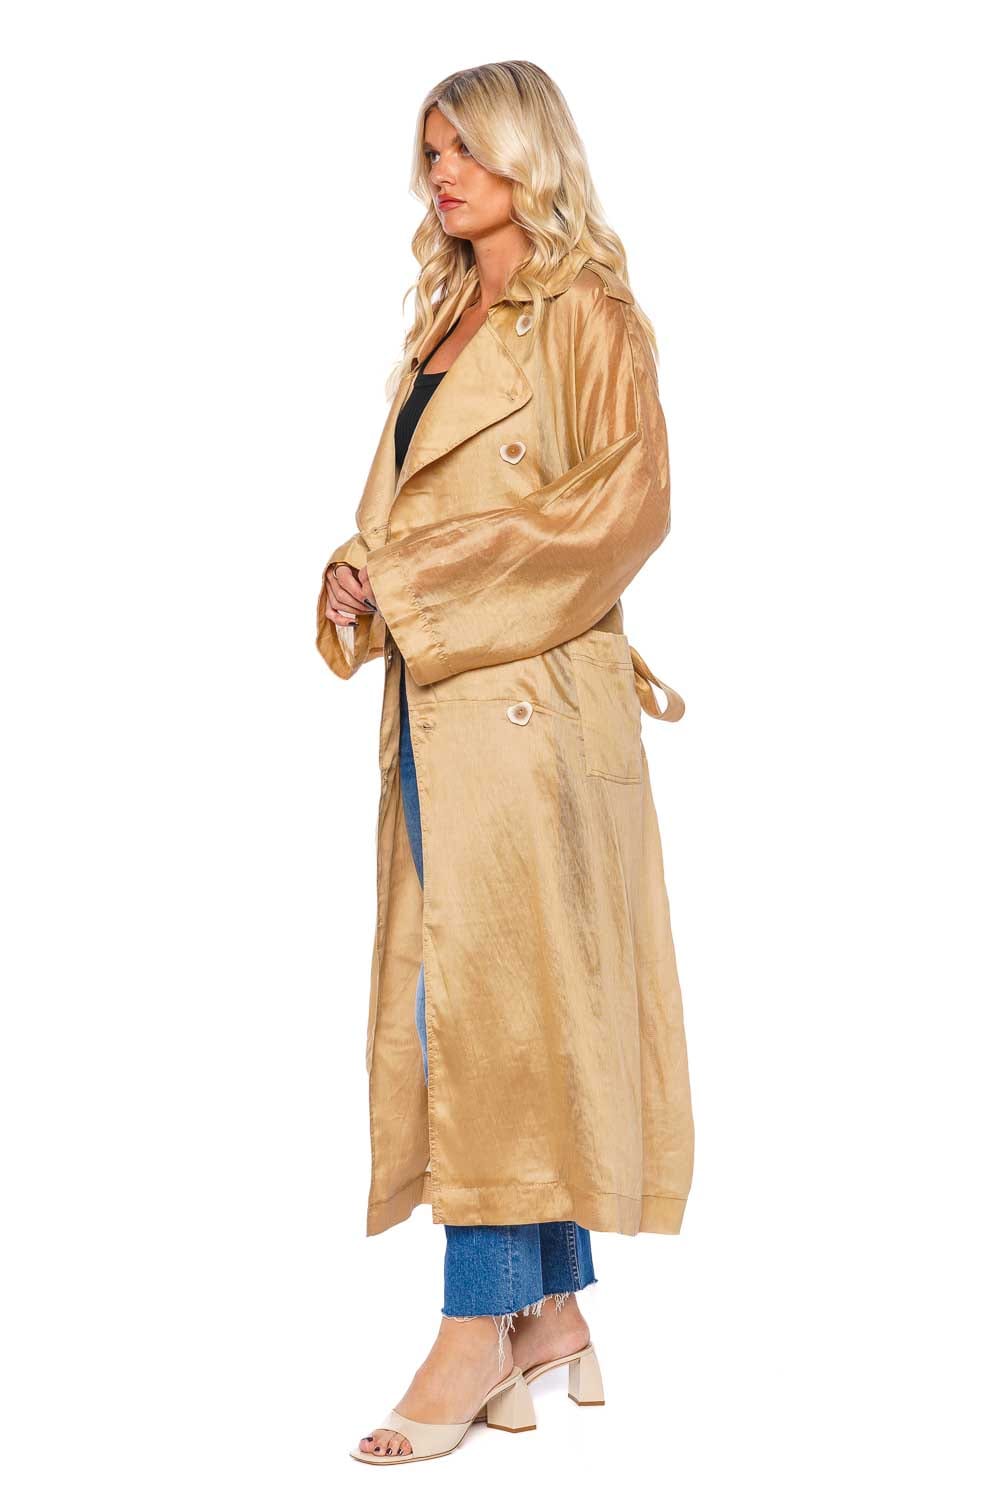 Aje. Harmony Sand Brown Oversized Sheer Coat